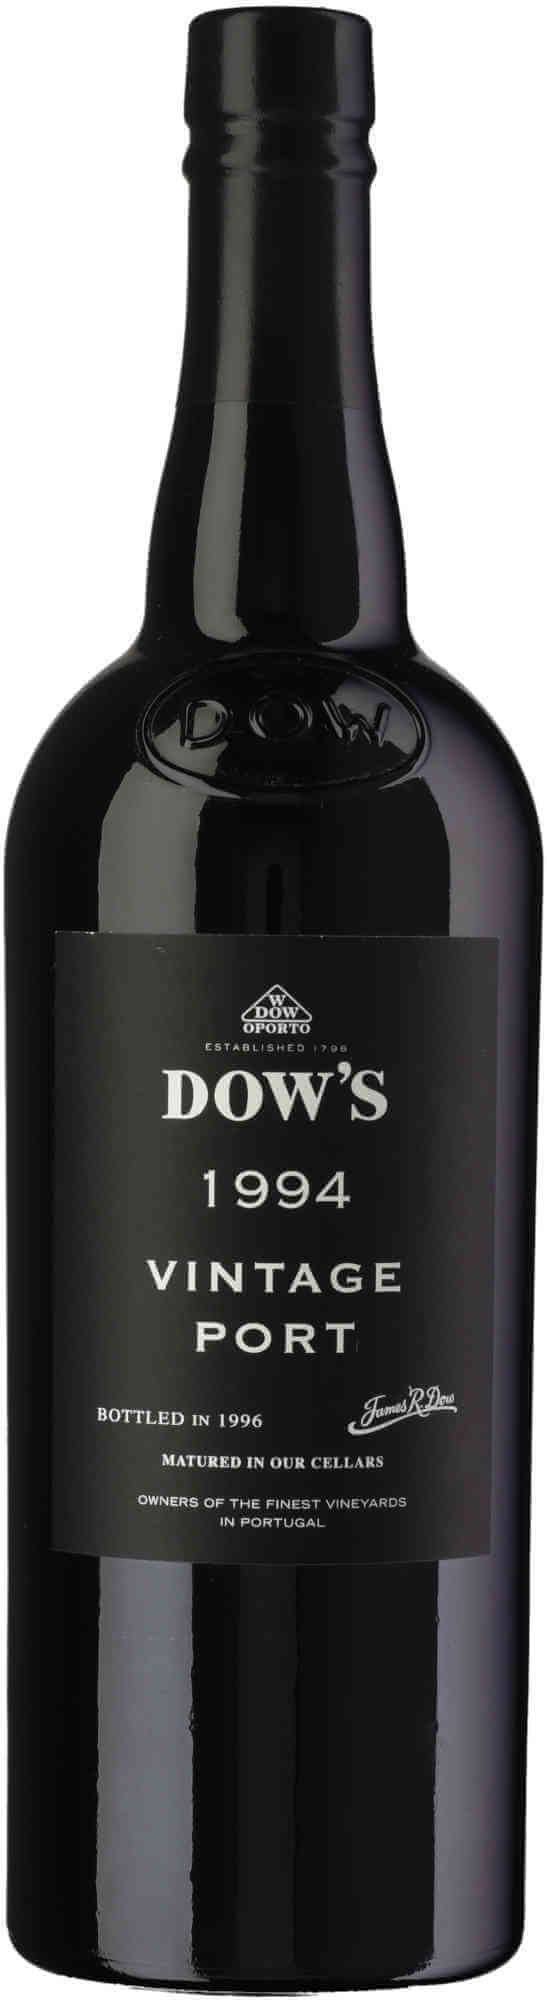 Dows-Vintage-Port-1994